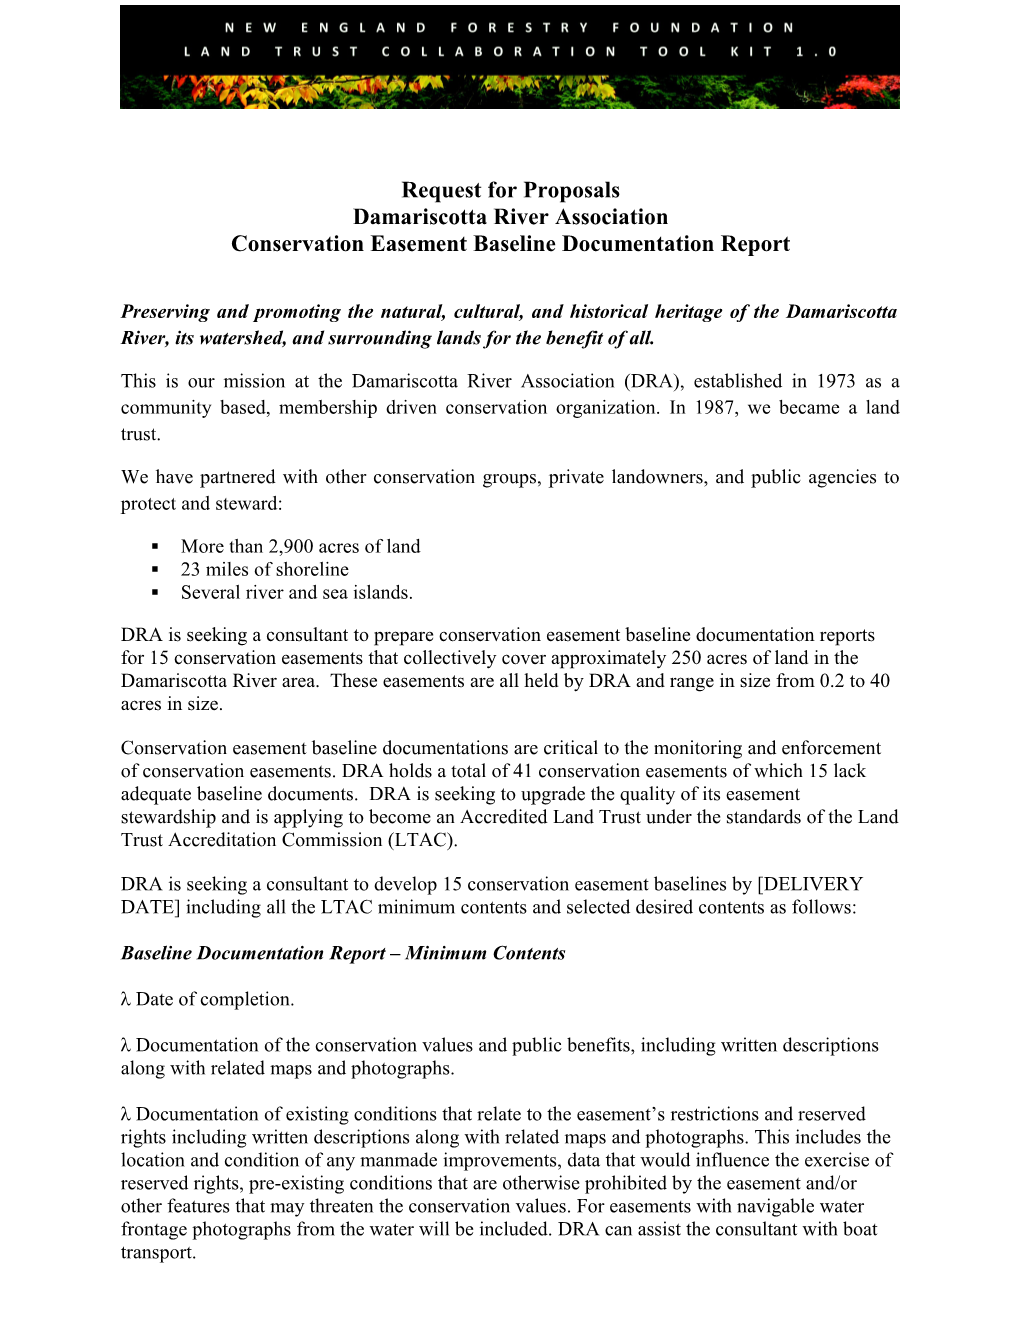 Conservation Easement Baseline Documentation Report